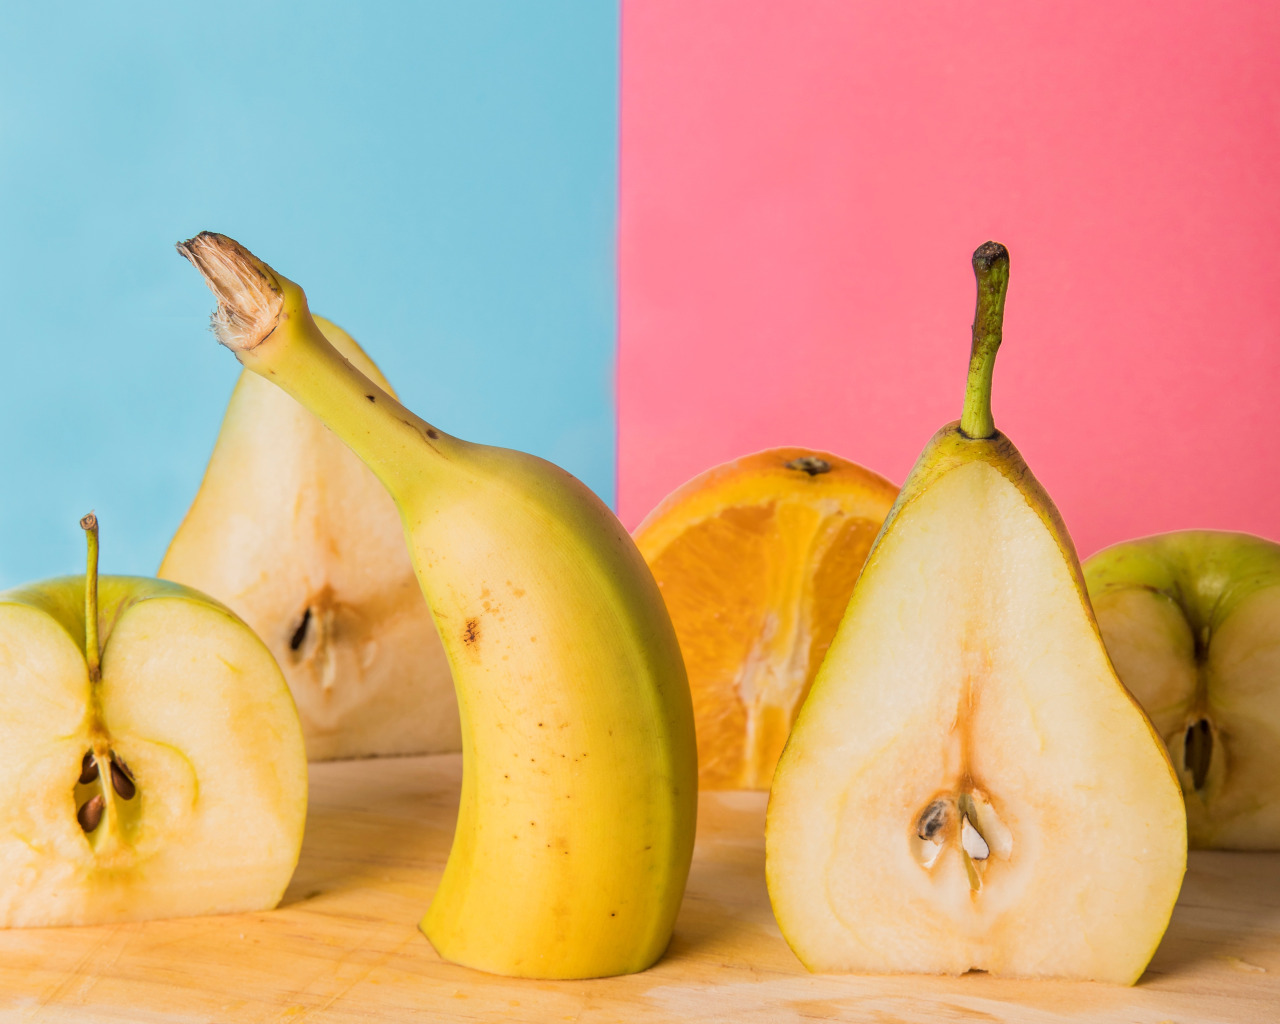 Orange pear. Эпл груша банан. Яблоко груша банан апельсин. Яблоки и бананы. Груши и цитрусовые.